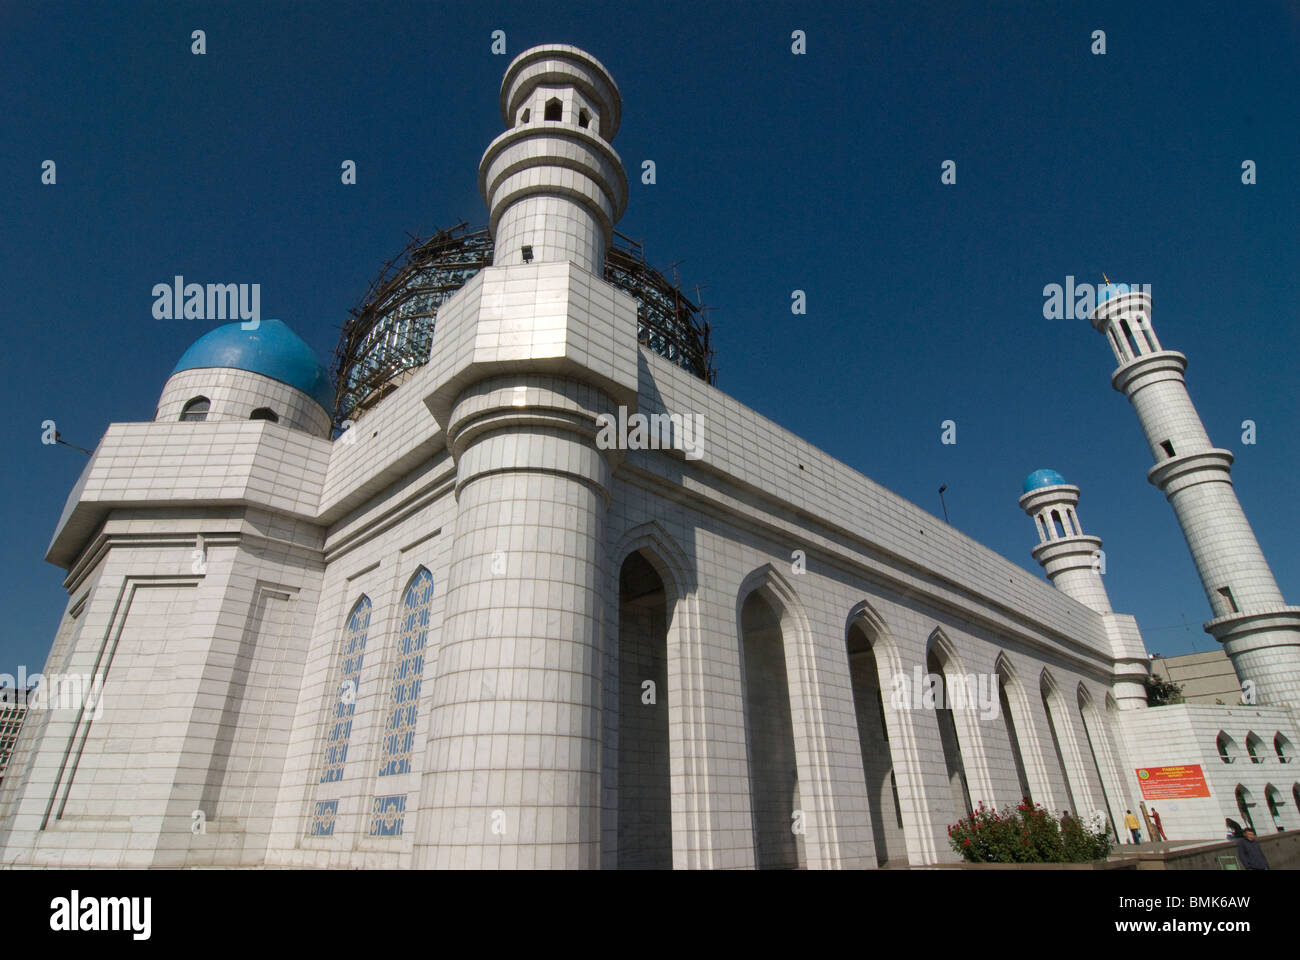 Central mosque, Almaty, Kazakhstan Stock Photo